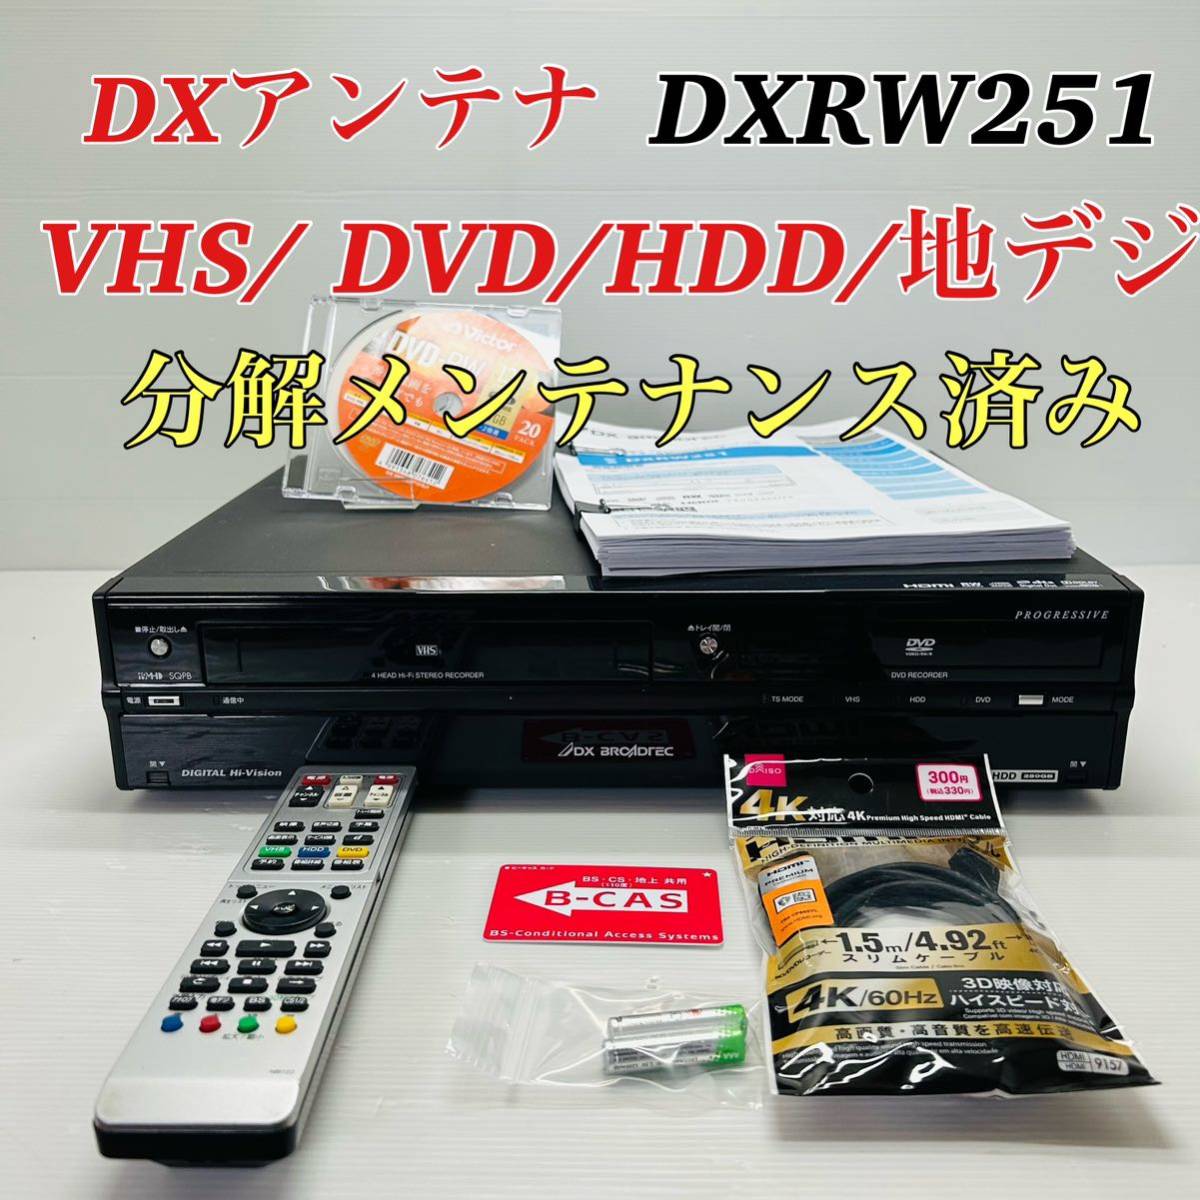 Yahoo!オークション - DXアンテナ DXRW251 VHS/ DVD/HDD/地...